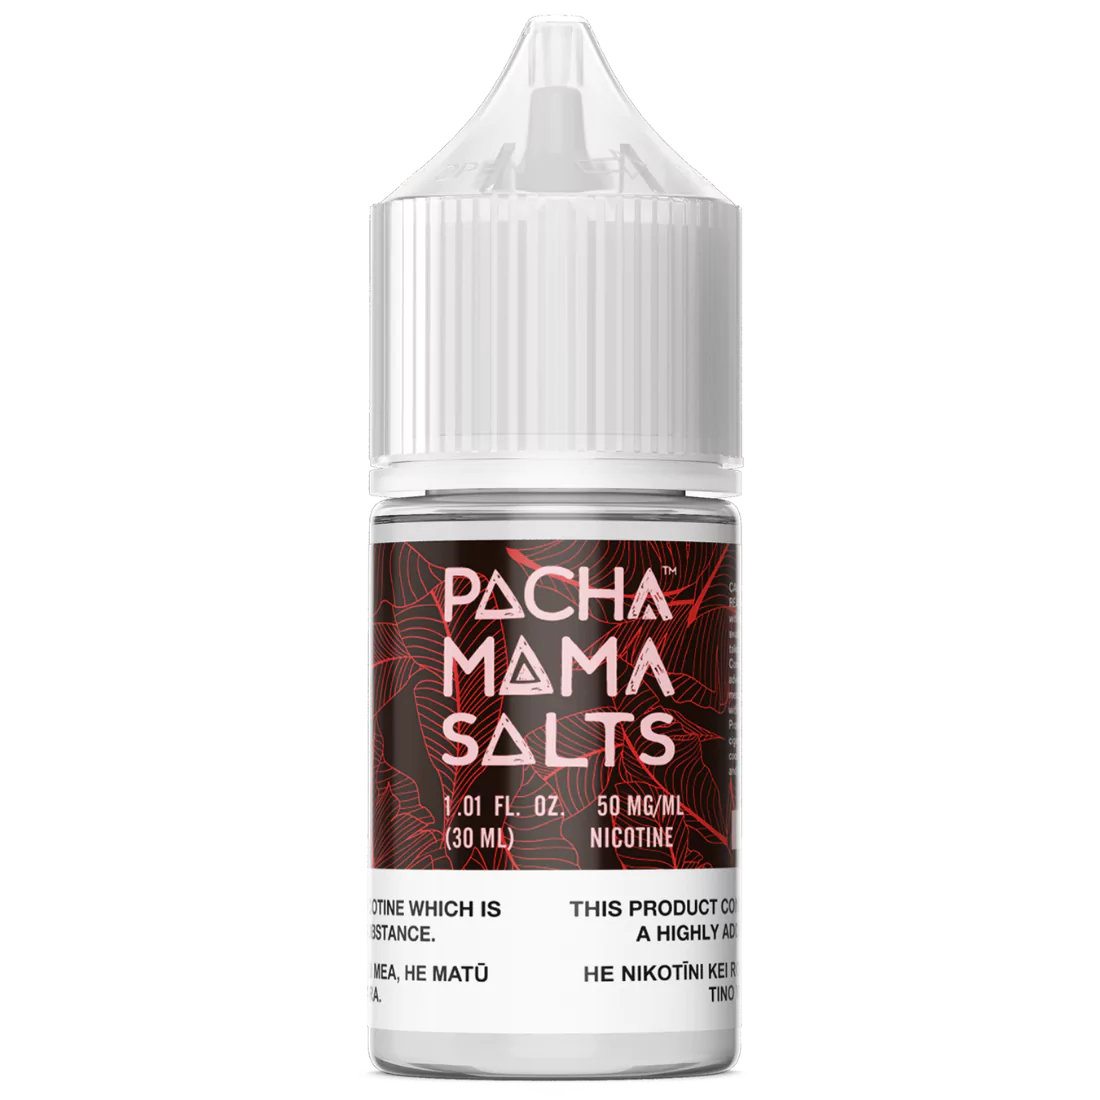 Pacha Mama Salts - Apple Tobacco - Vape Vend